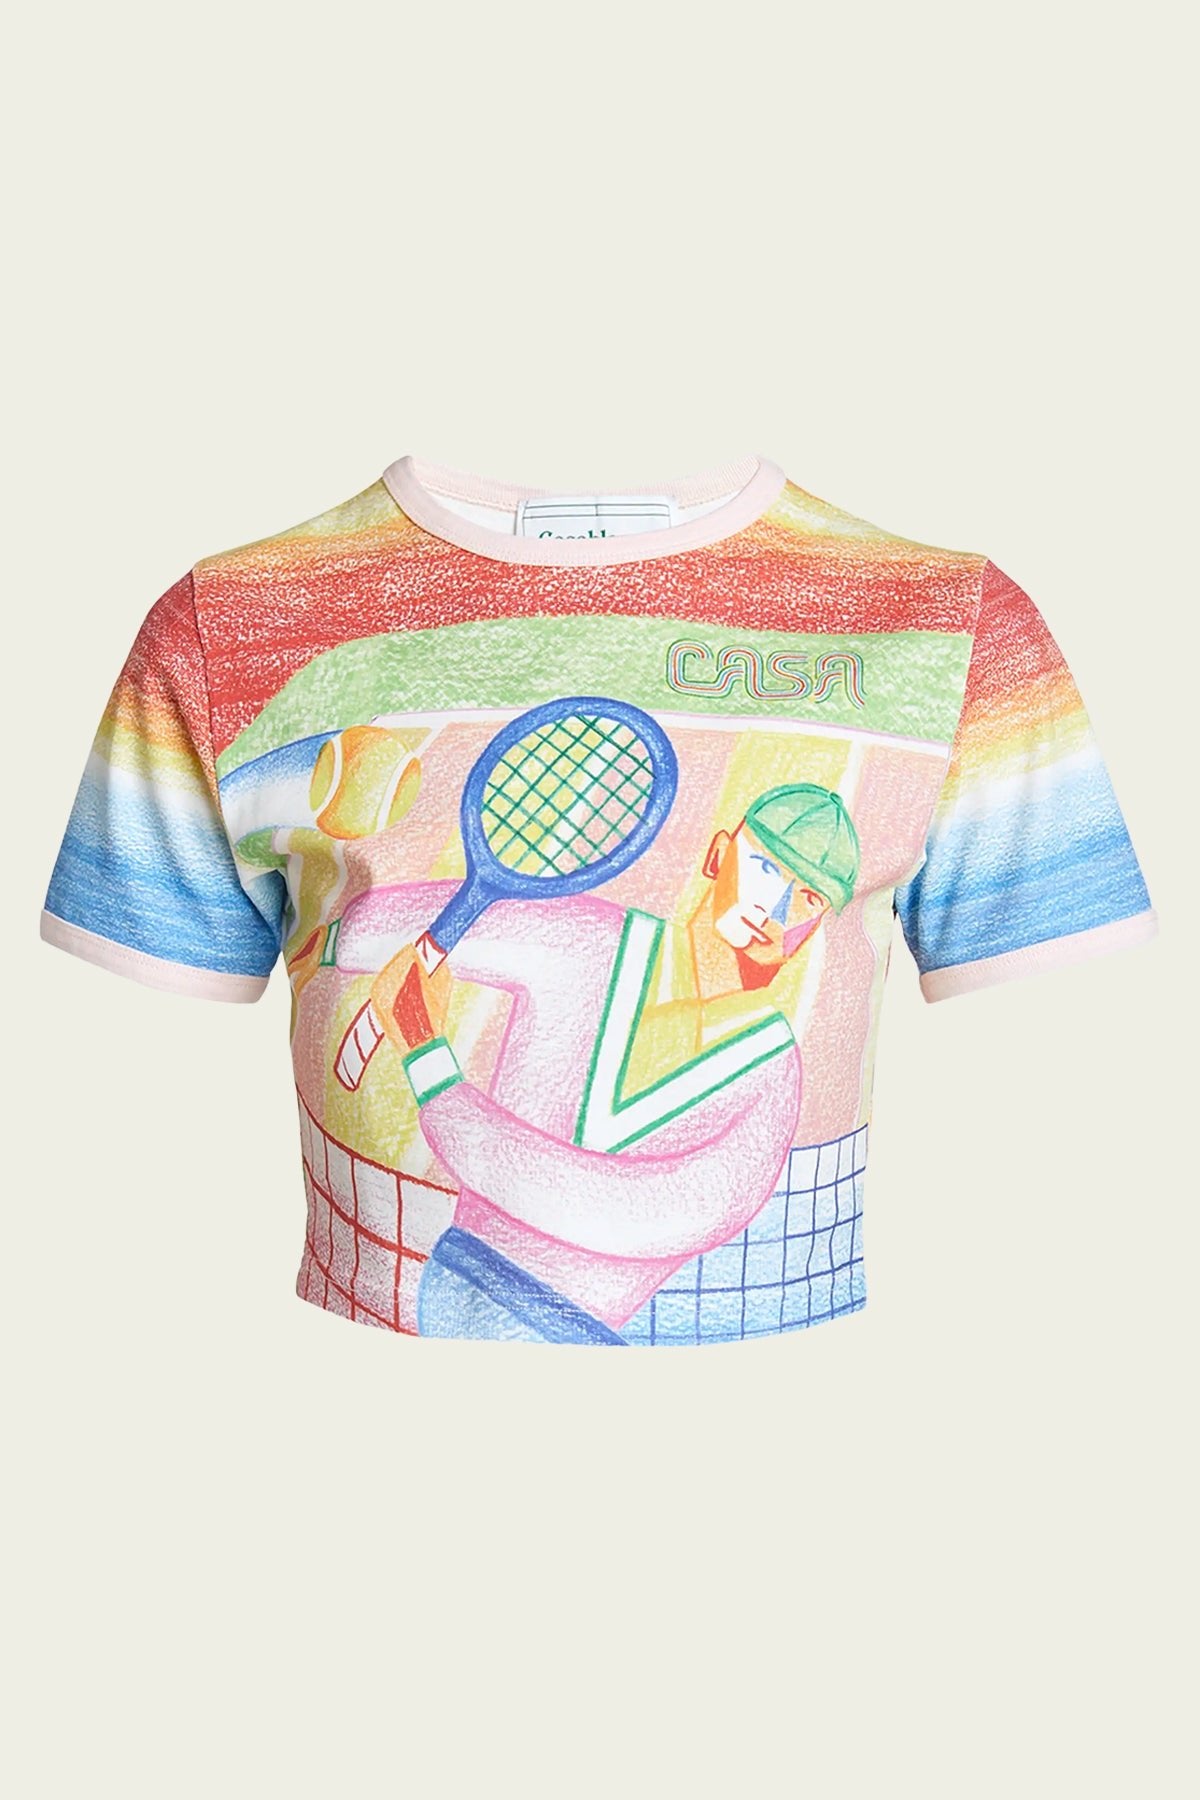 Tennis Player Printed Crop Baby Ringer T-Shirt in Crayon - shop-olivia.com